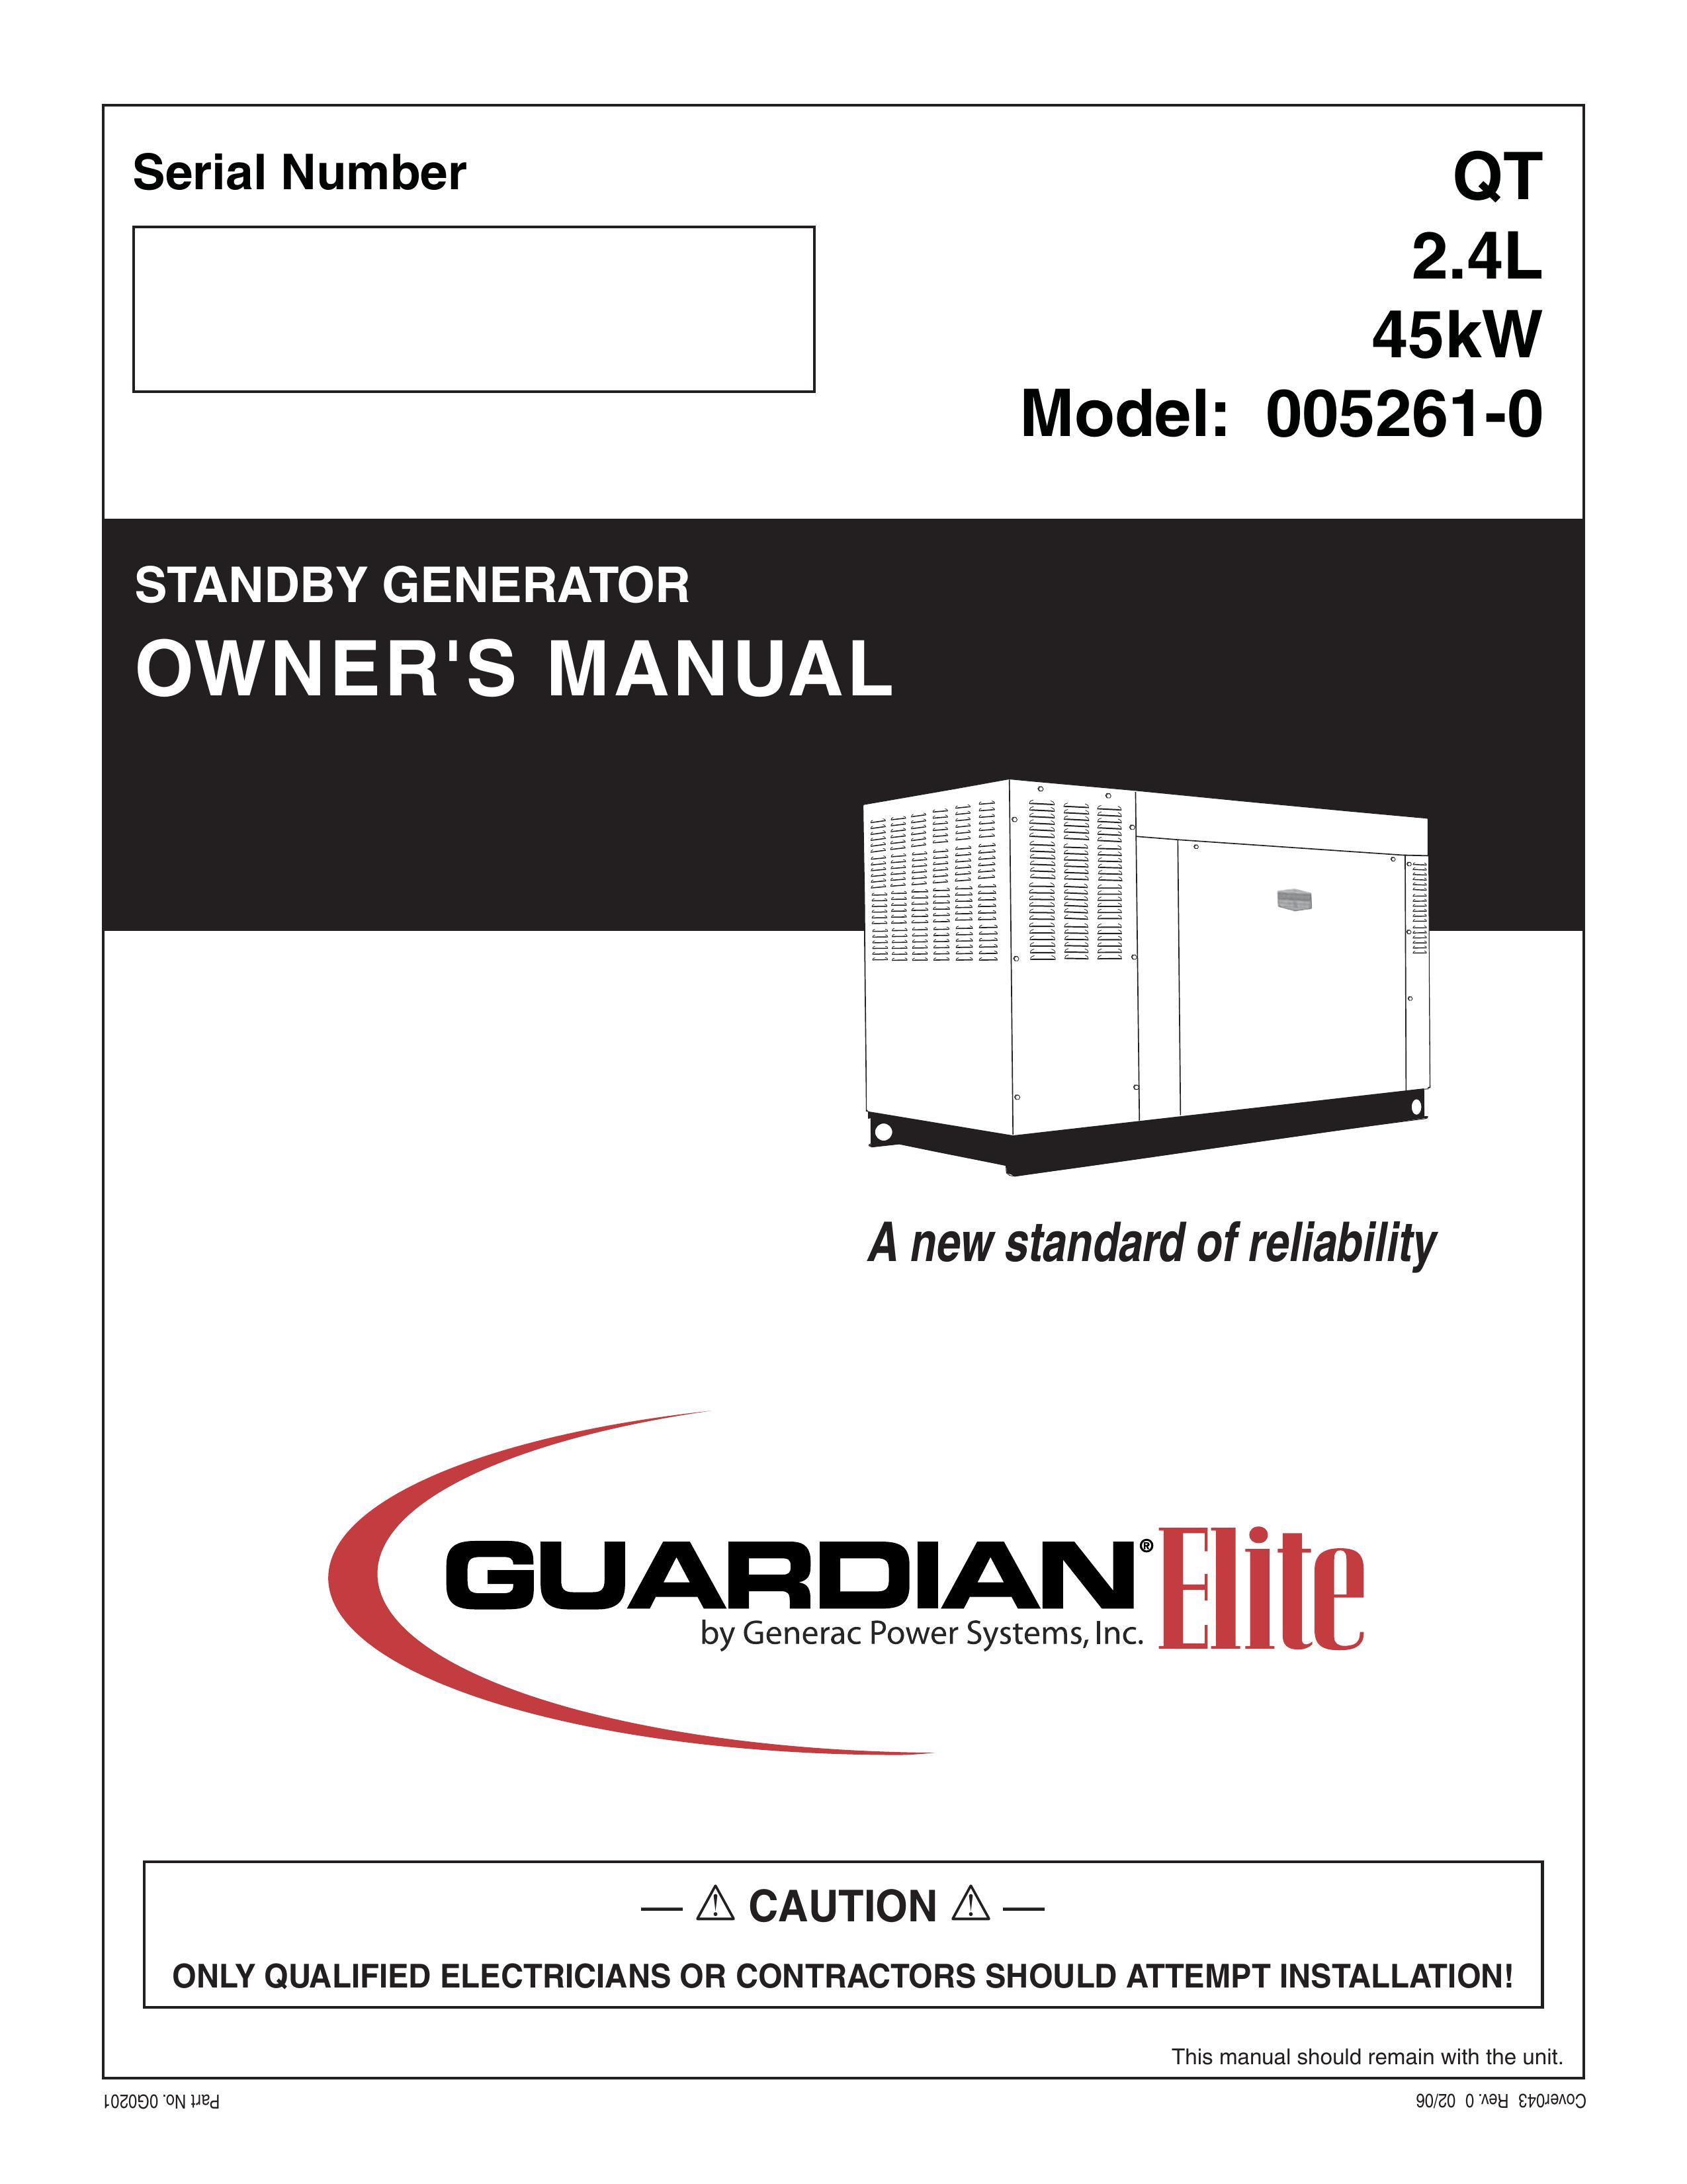 Grandstream Networks 005261-0 Portable Generator User Manual